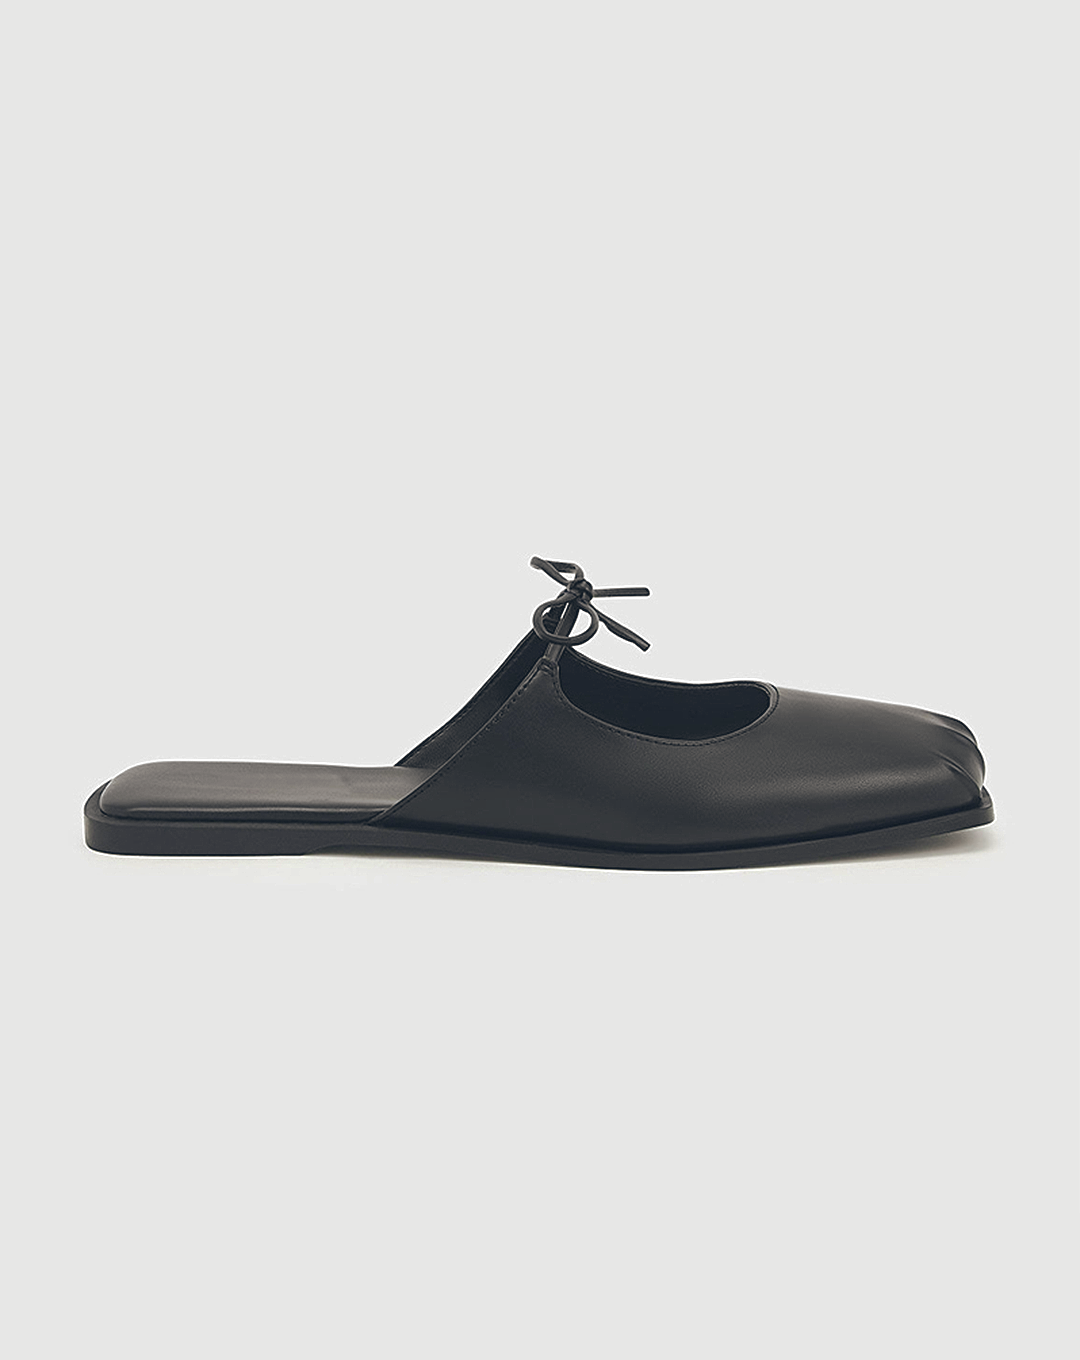 ♀Bowknot Flat Mule Sandals